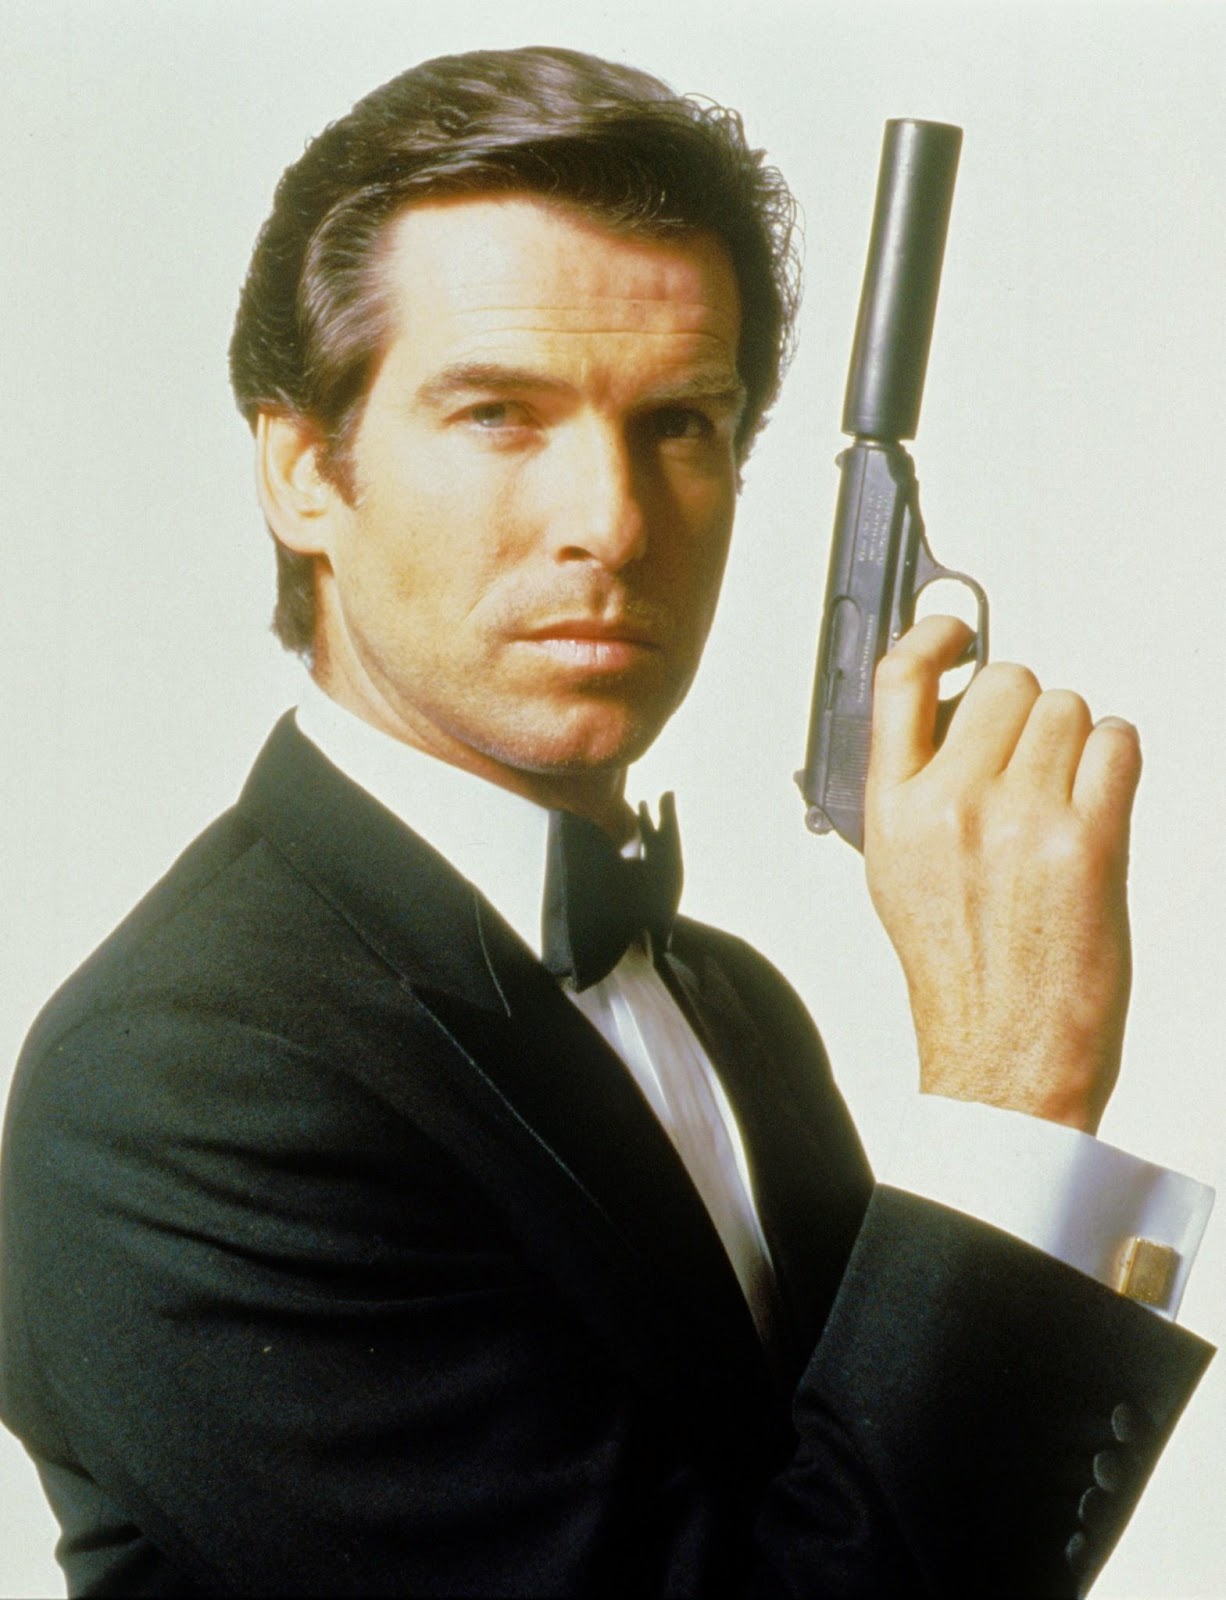 Trelane's Blog: 007: GOLDENEYE (1995) starring Pierce Brosnan as James Bond